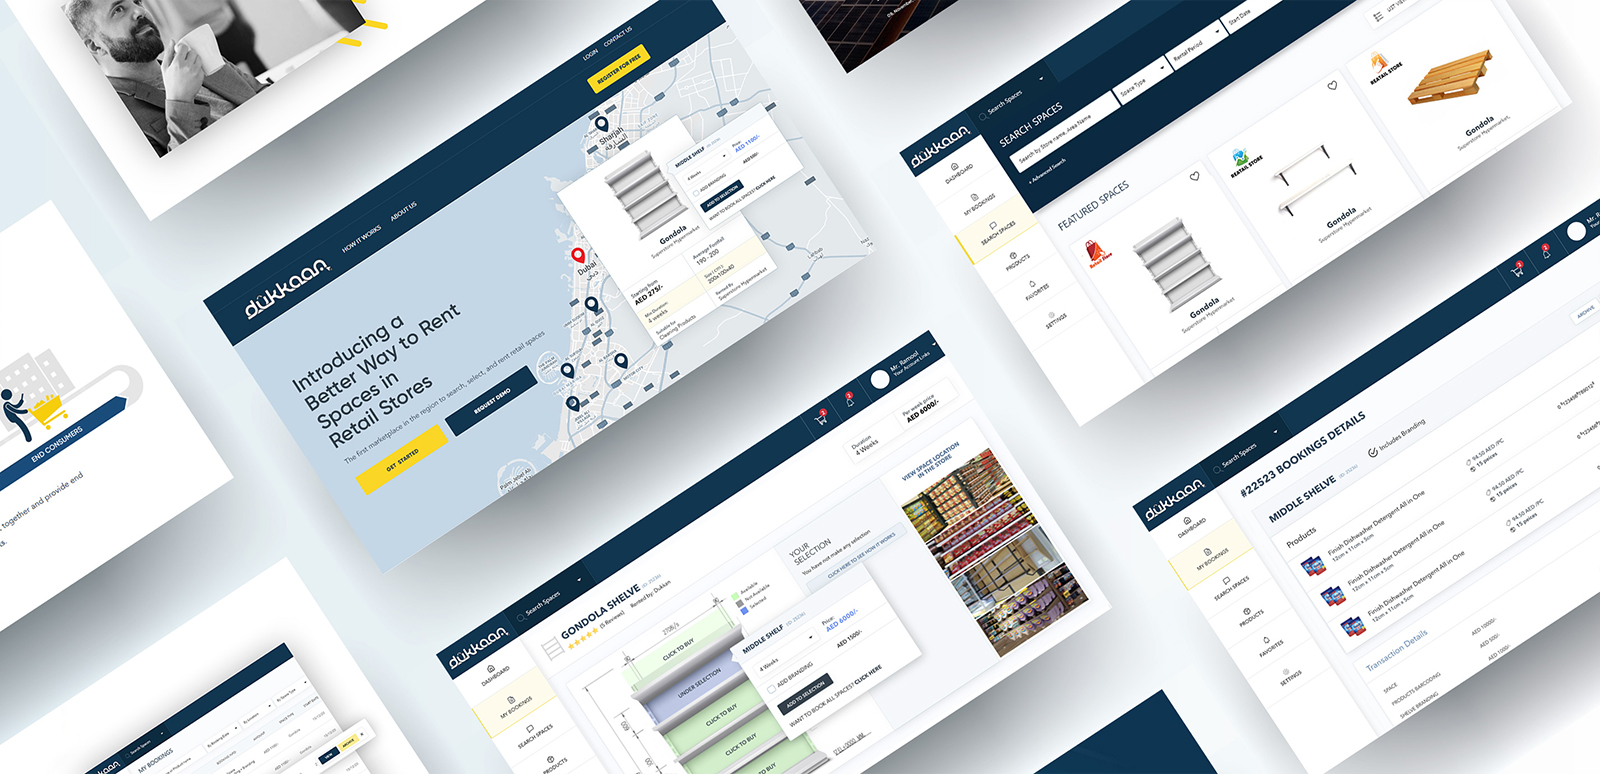 Dukkan Case Study - UI/UX design to responsive web application - Element8 Dubai